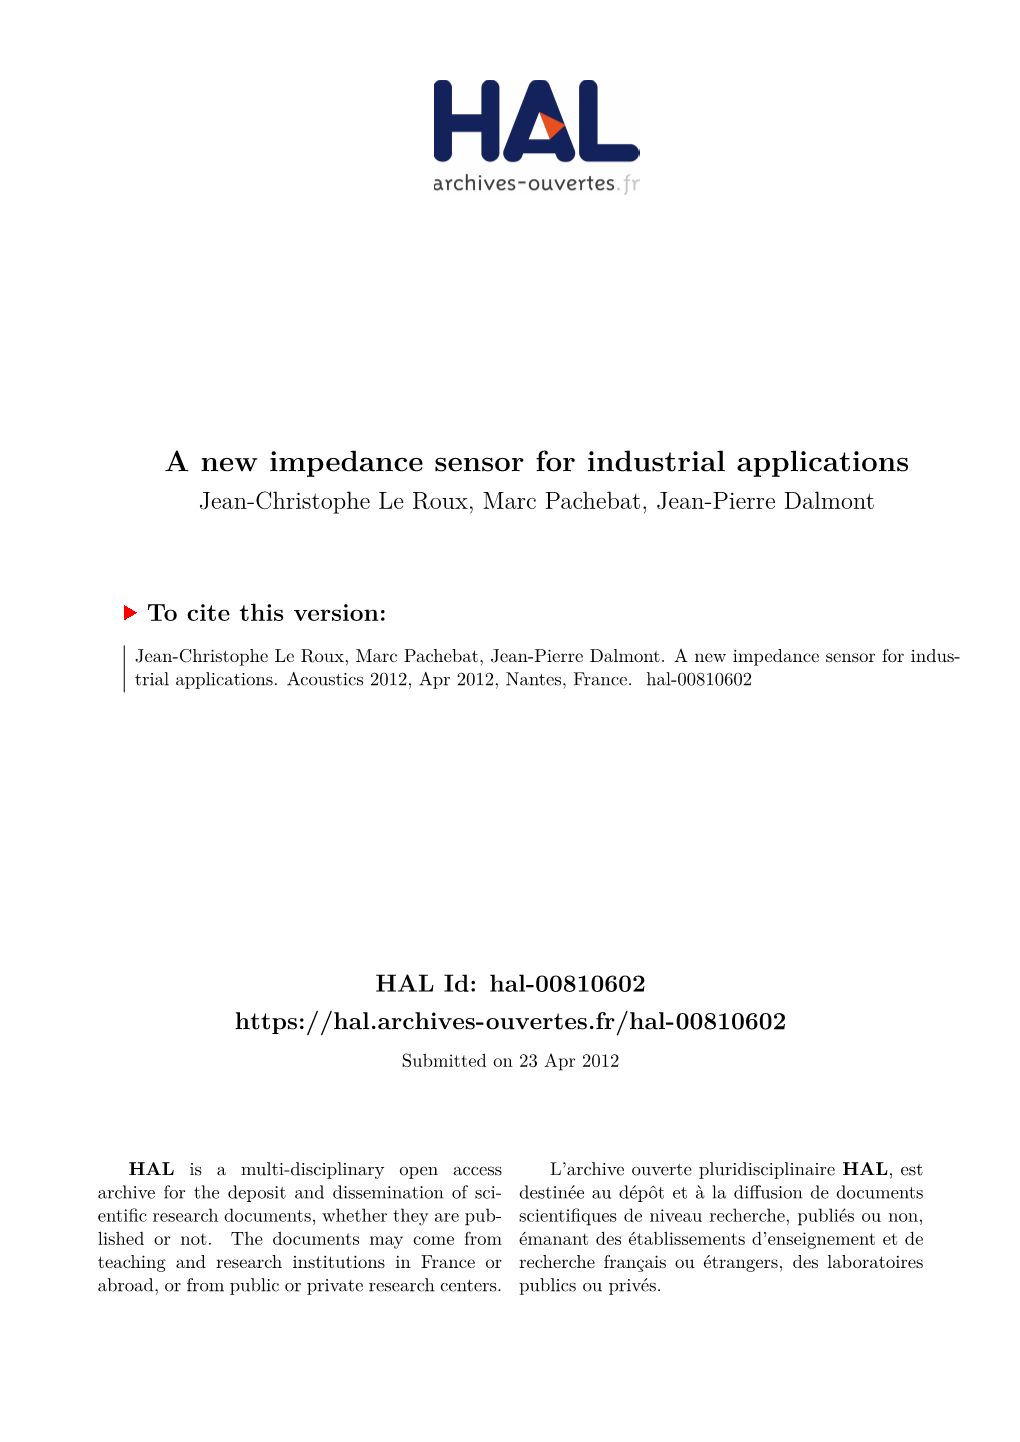 A New Impedance Sensor for Industrial Applications Jean-Christophe Le Roux, Marc Pachebat, Jean-Pierre Dalmont